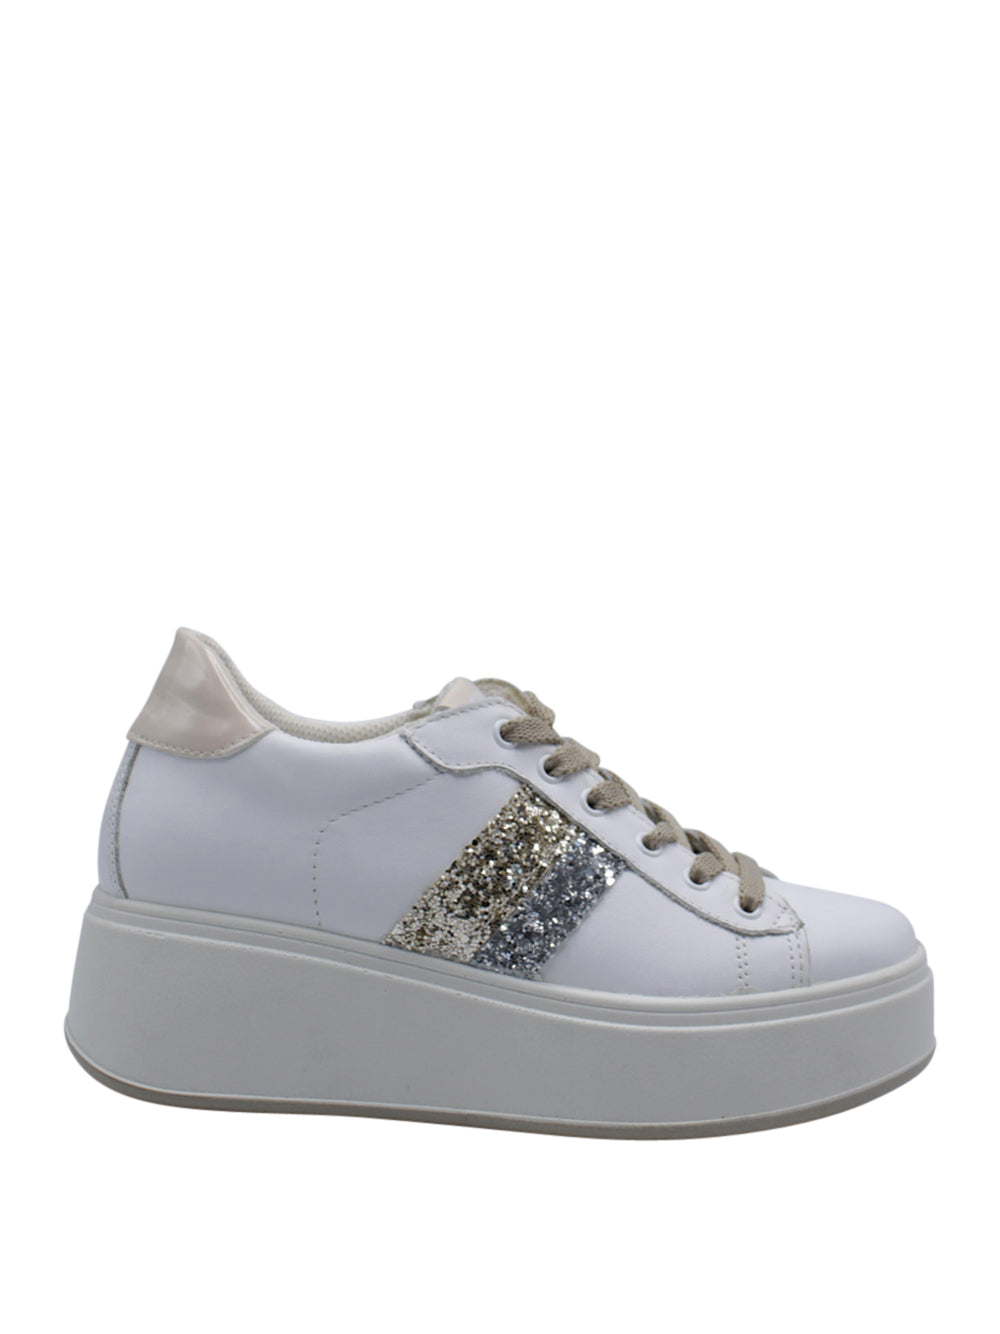 IGI&CO Sneakers platform Donna - Bianco modello 5659611